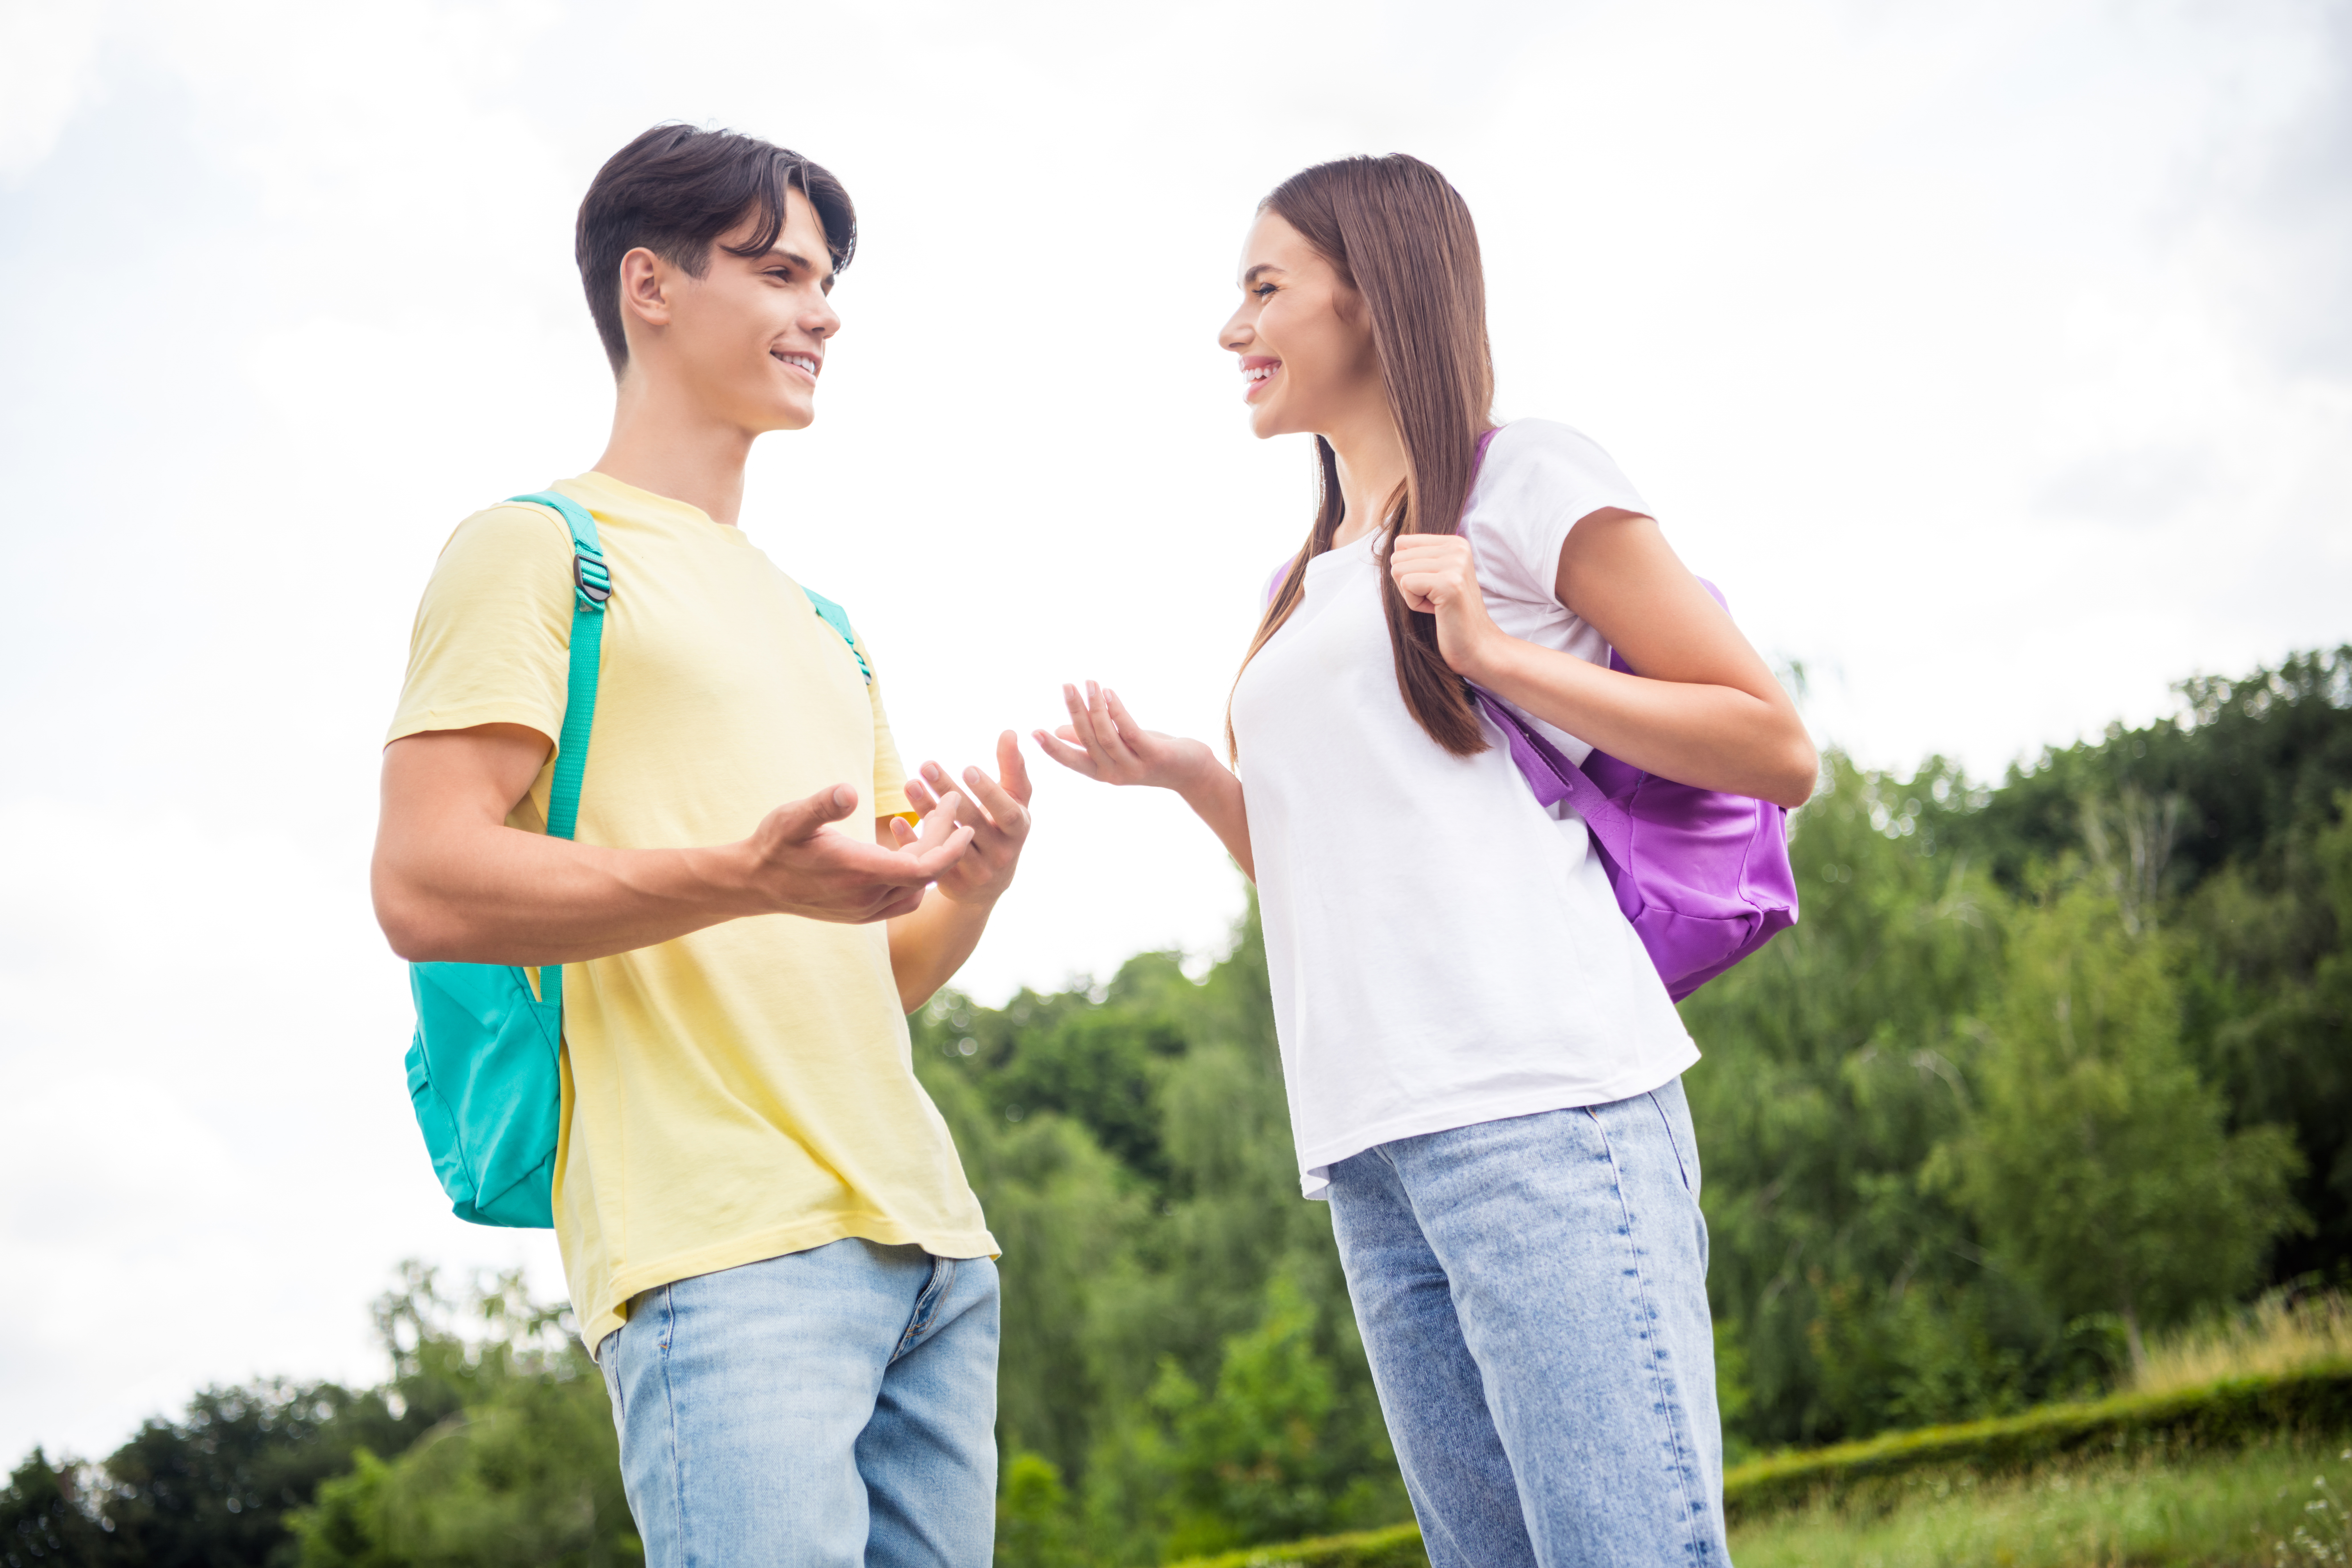 High school boy and girl talking. | Source: Shutterstock